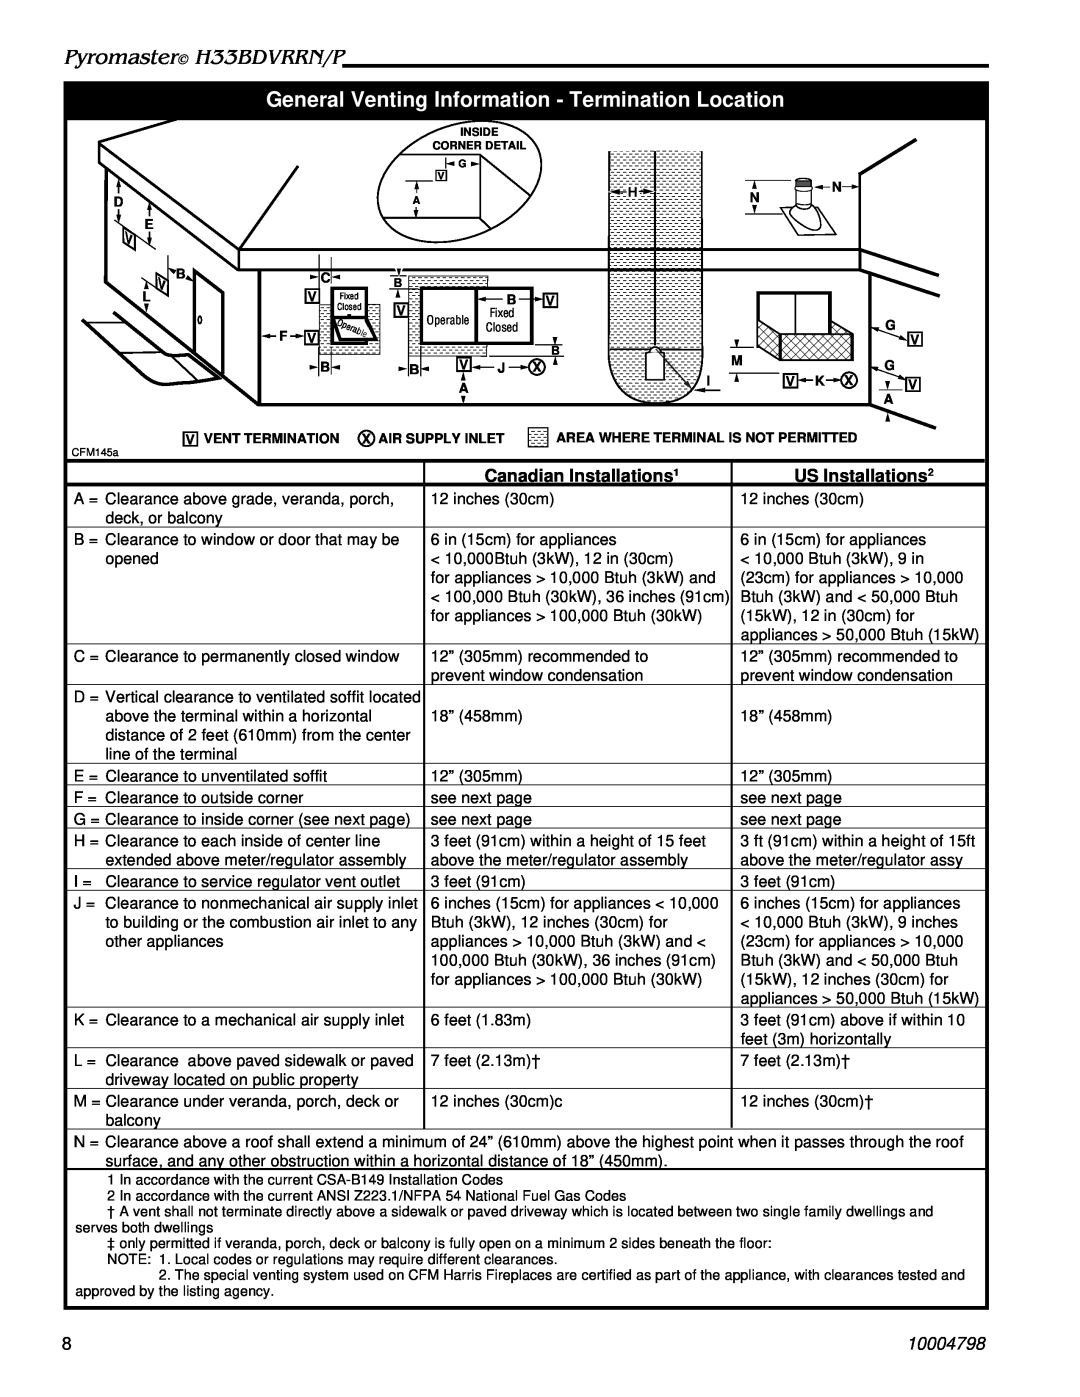 Vermont Casting H33BDVRRNP manual Pyromaster H33BDVRRN/P, Canadian Installations1, US Installations2, 10004798 